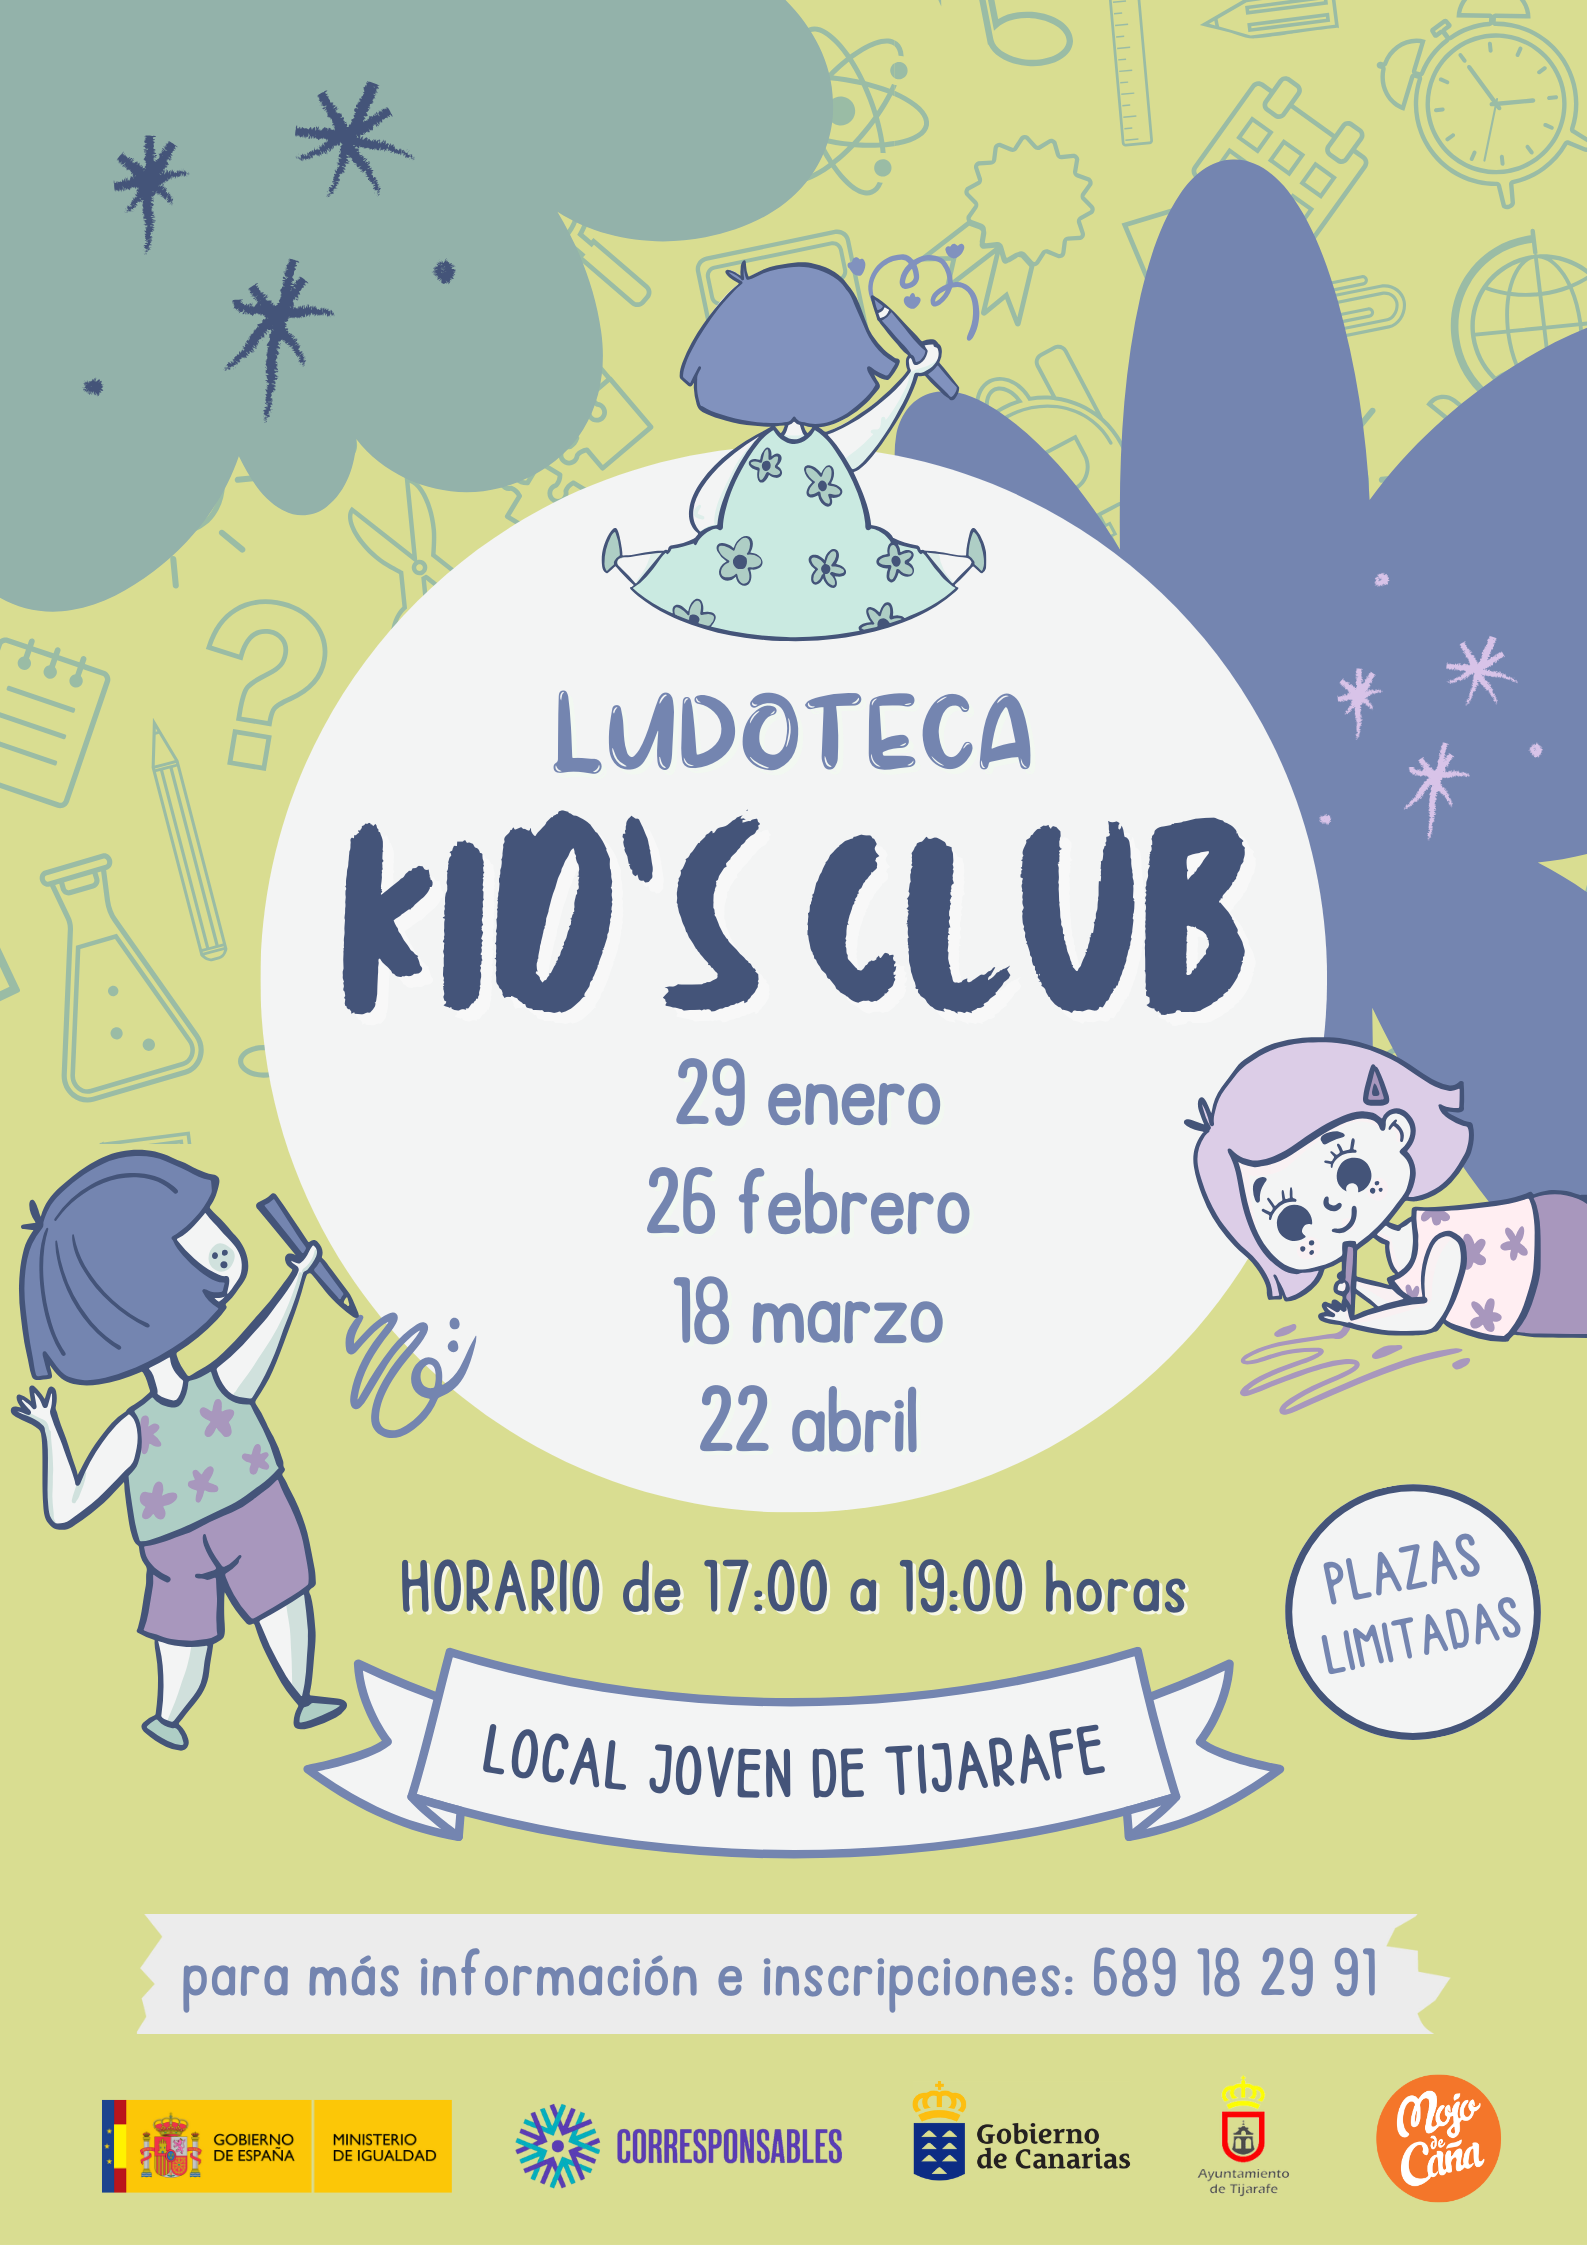 Ludoteca Kid’s Club